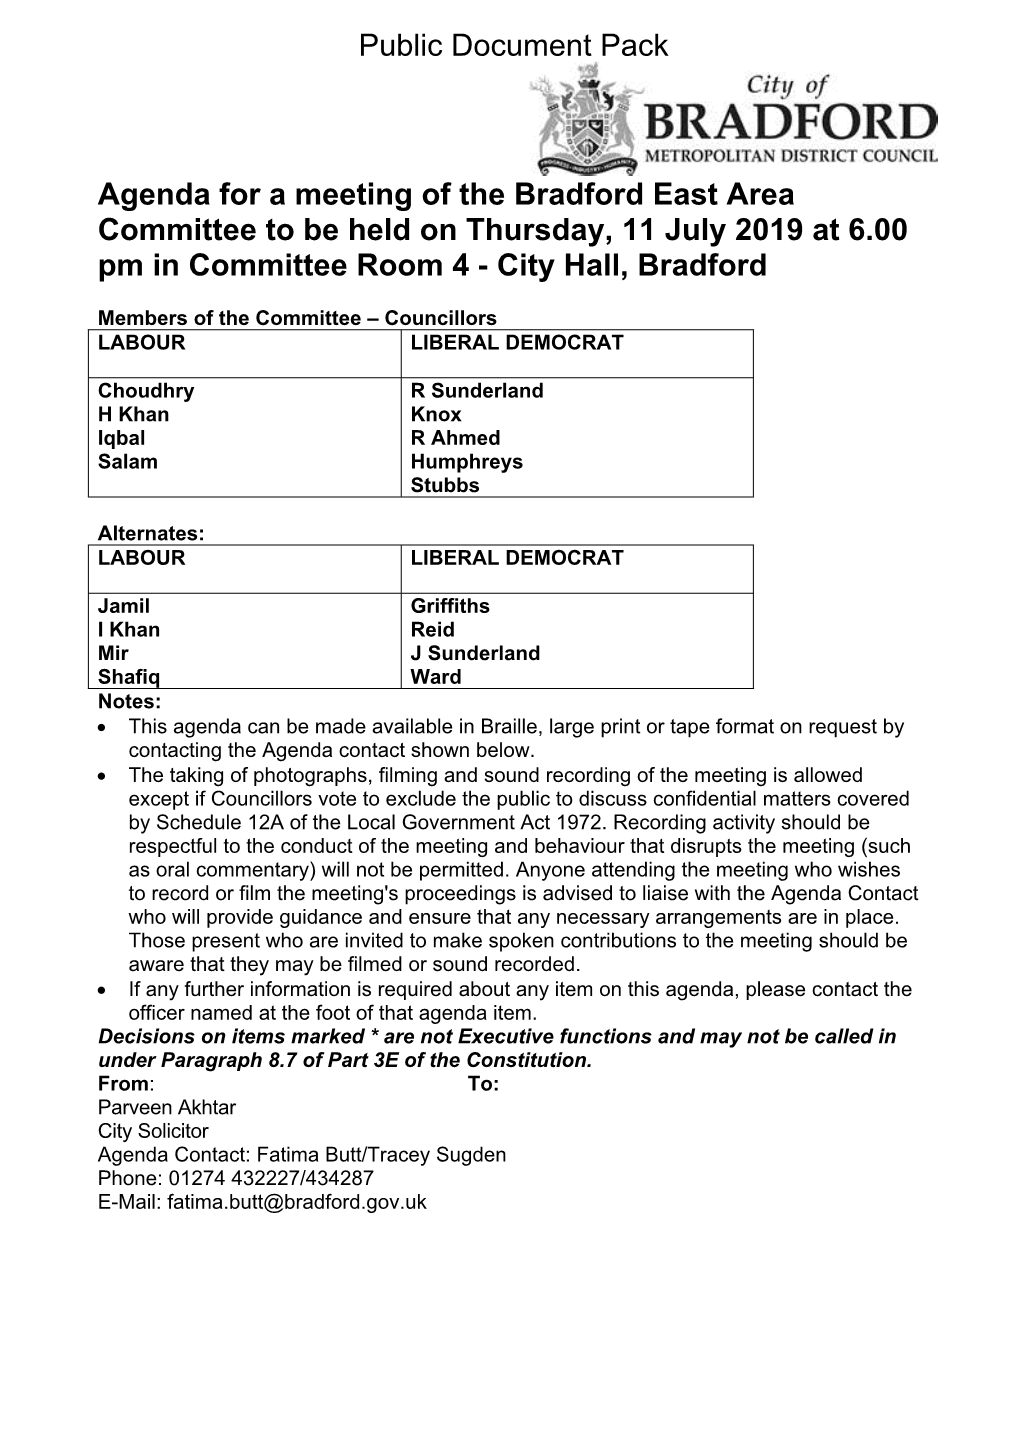 (Public Pack)Agenda Document for Bradford East Area Committee, 11